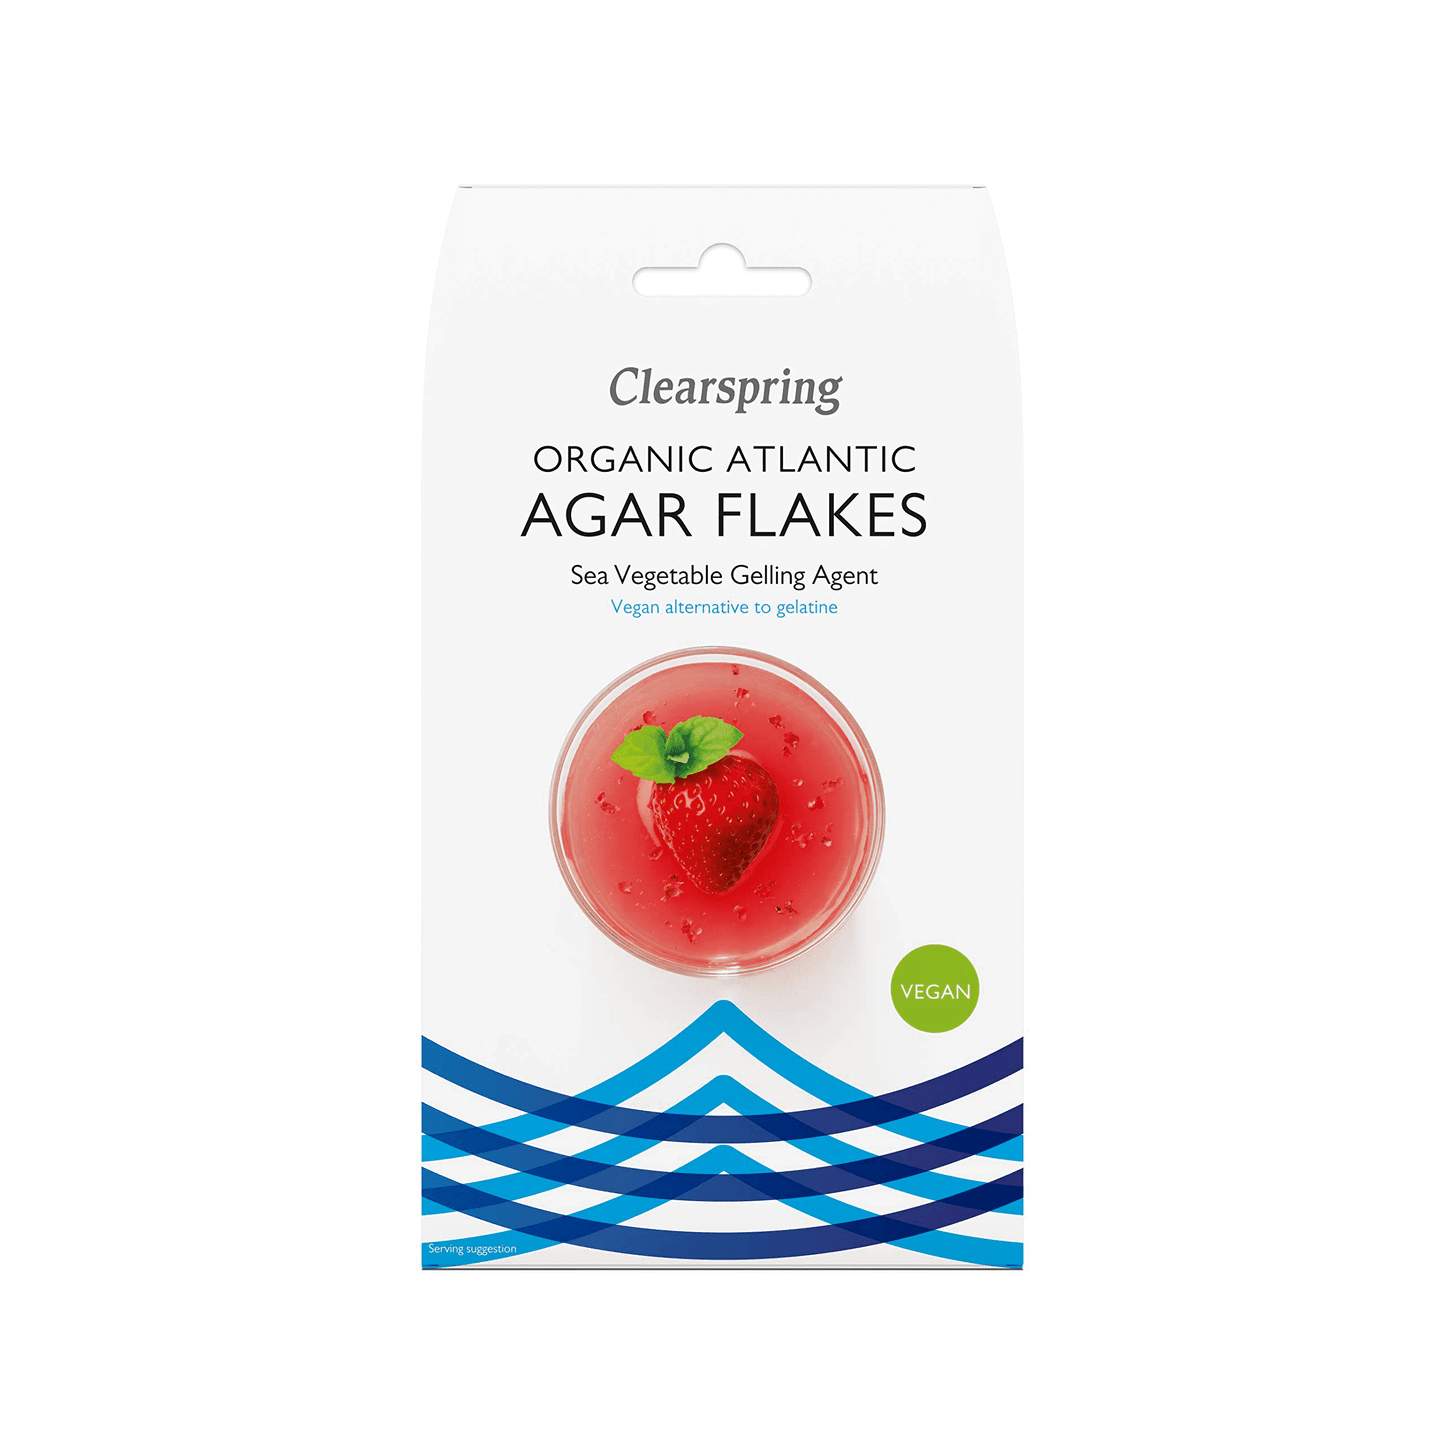 Clearspring Organic Atlantic Agar Flakes - Gelling Agent 30g Pack of 4